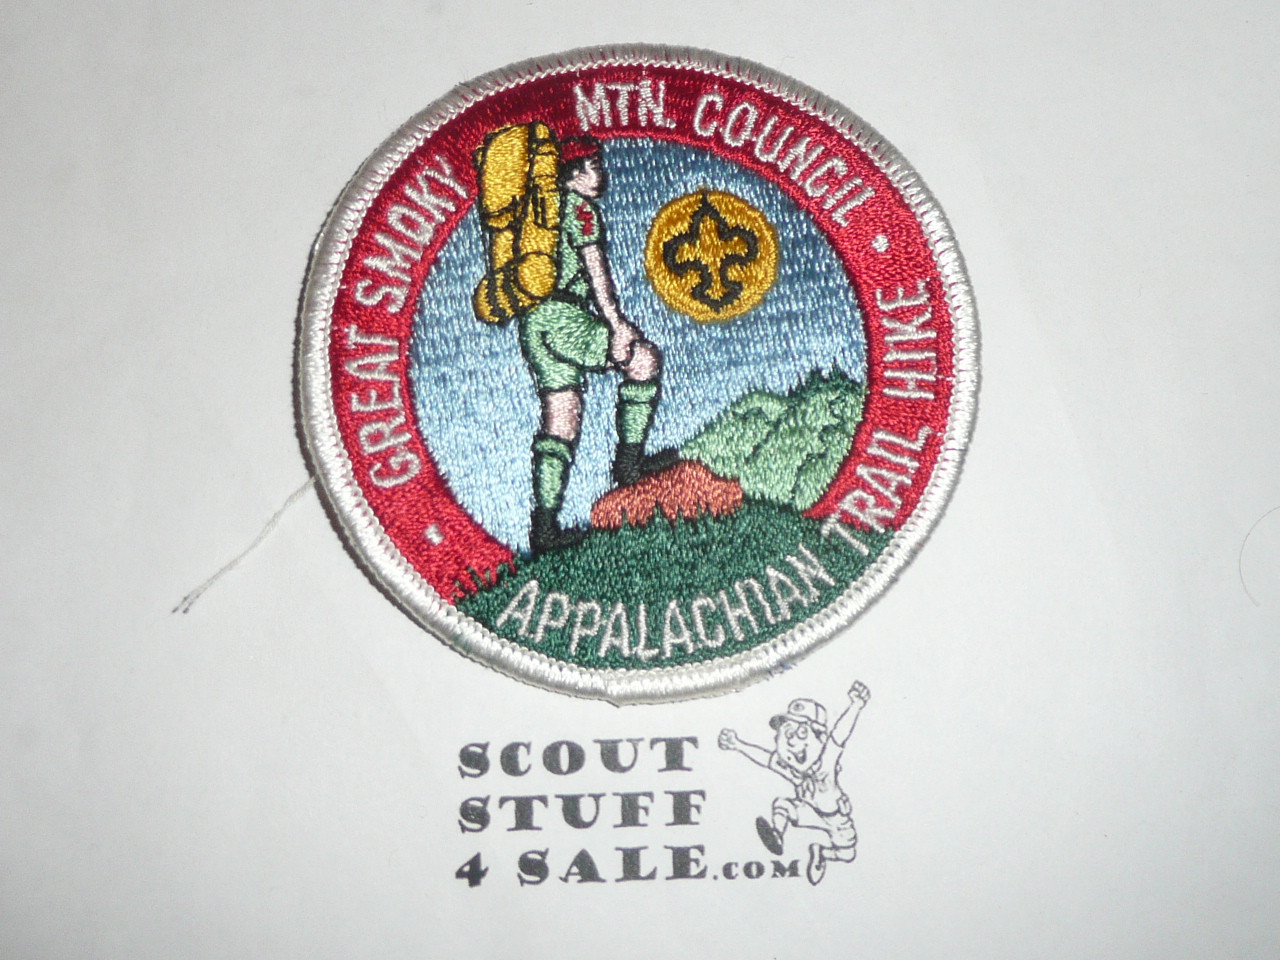 Appalachian Trail Hike Patch, Great Smoky Mountain Council